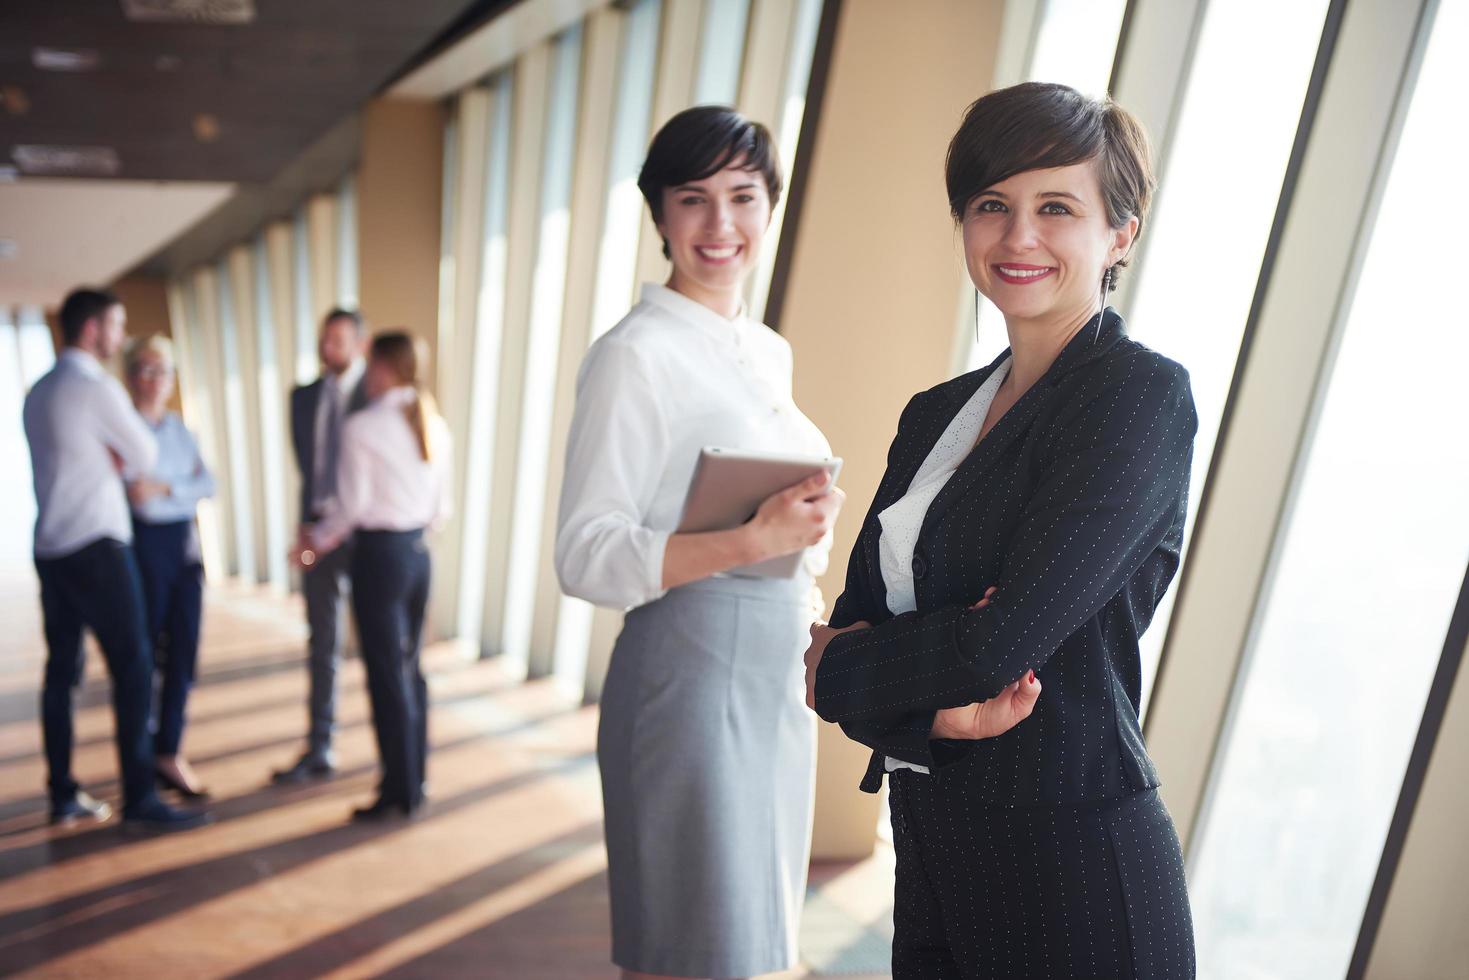 business people group, females as team leaders photo